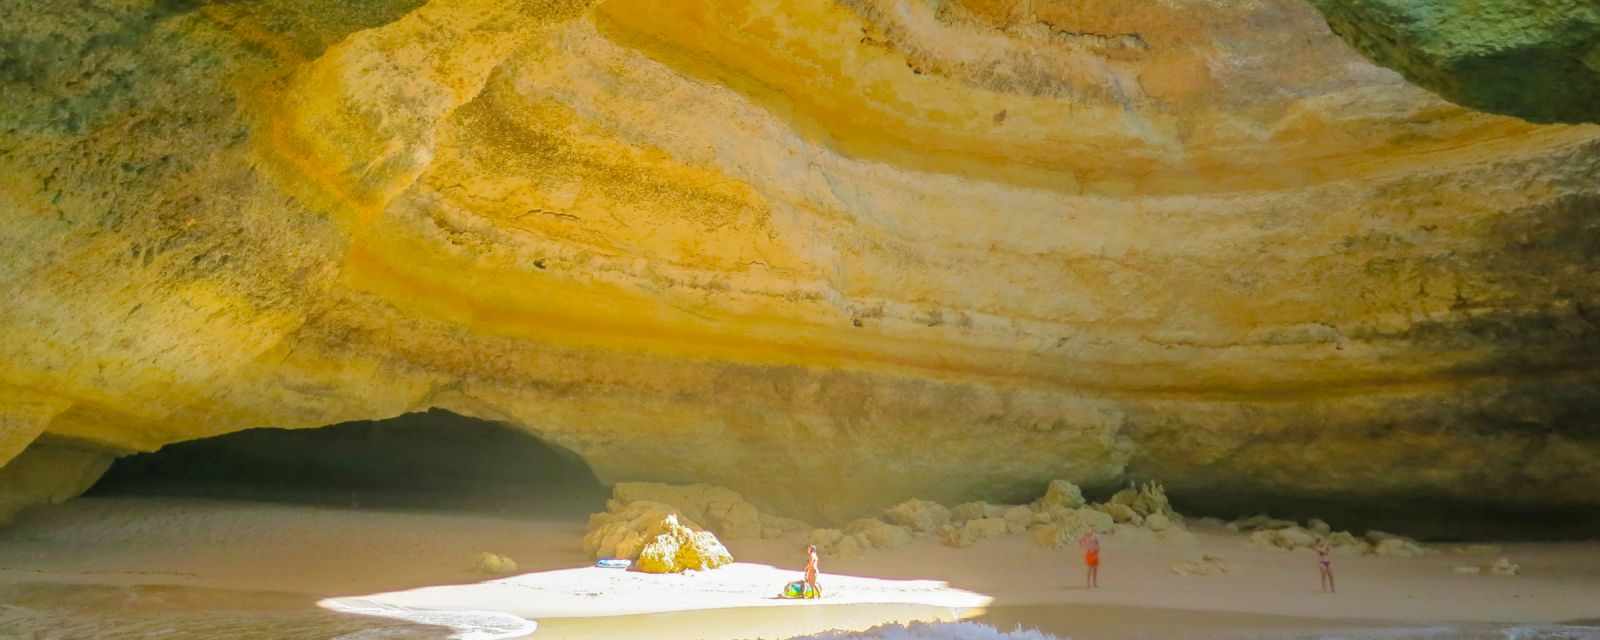 Gruta de Benagil - Benagil Cave - Algarve in Portugal